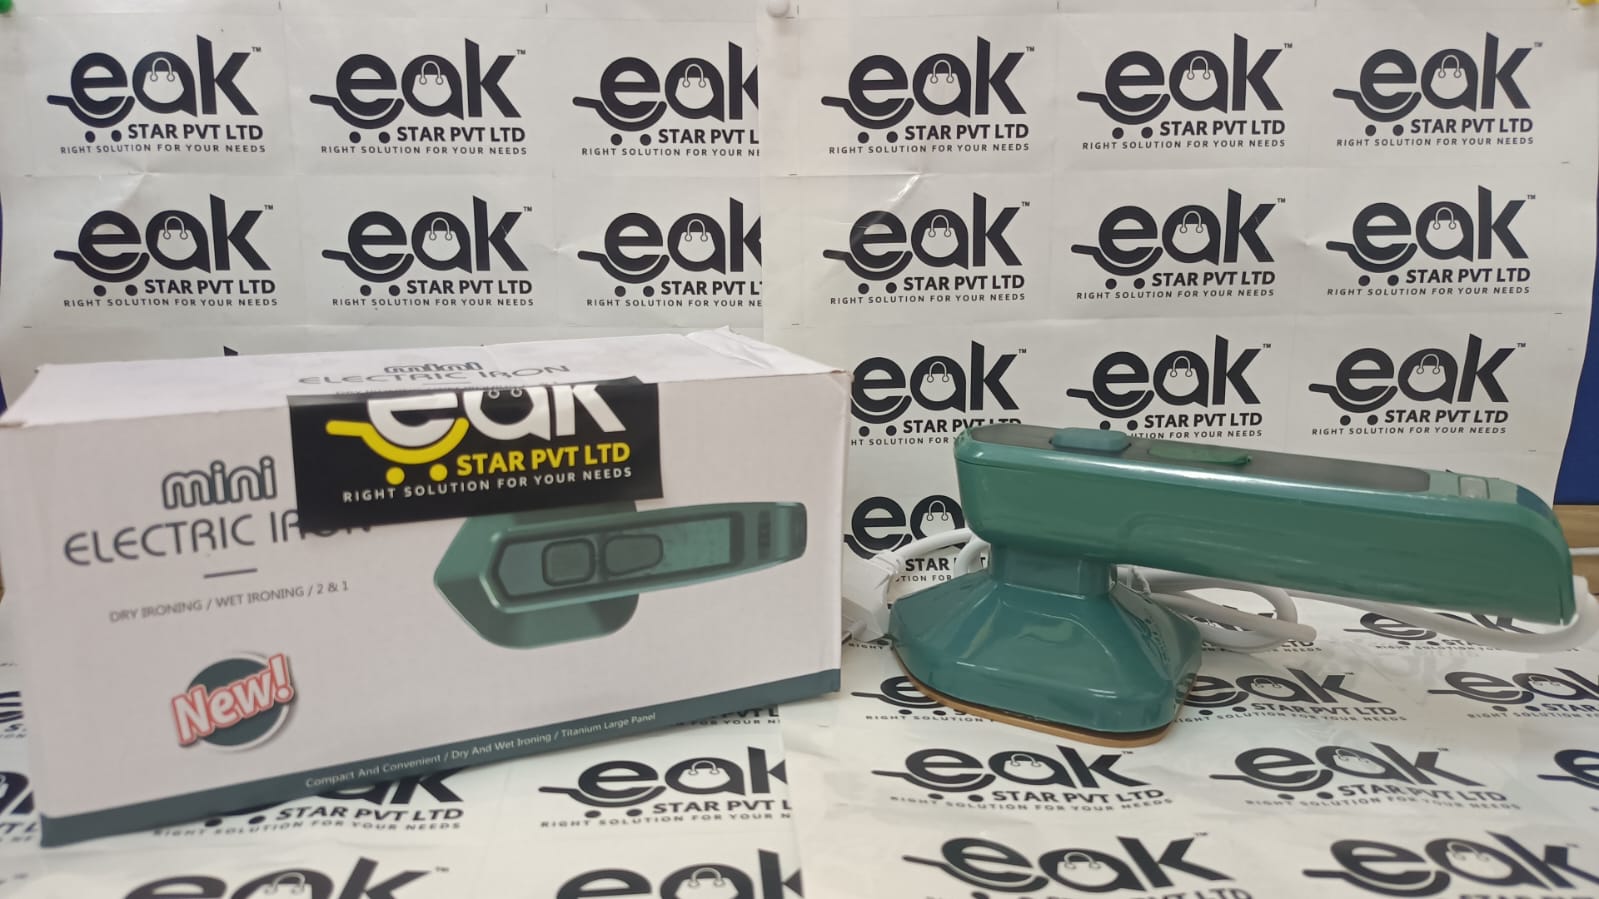 Eakstar | Mini Electric Iron - Eakstar